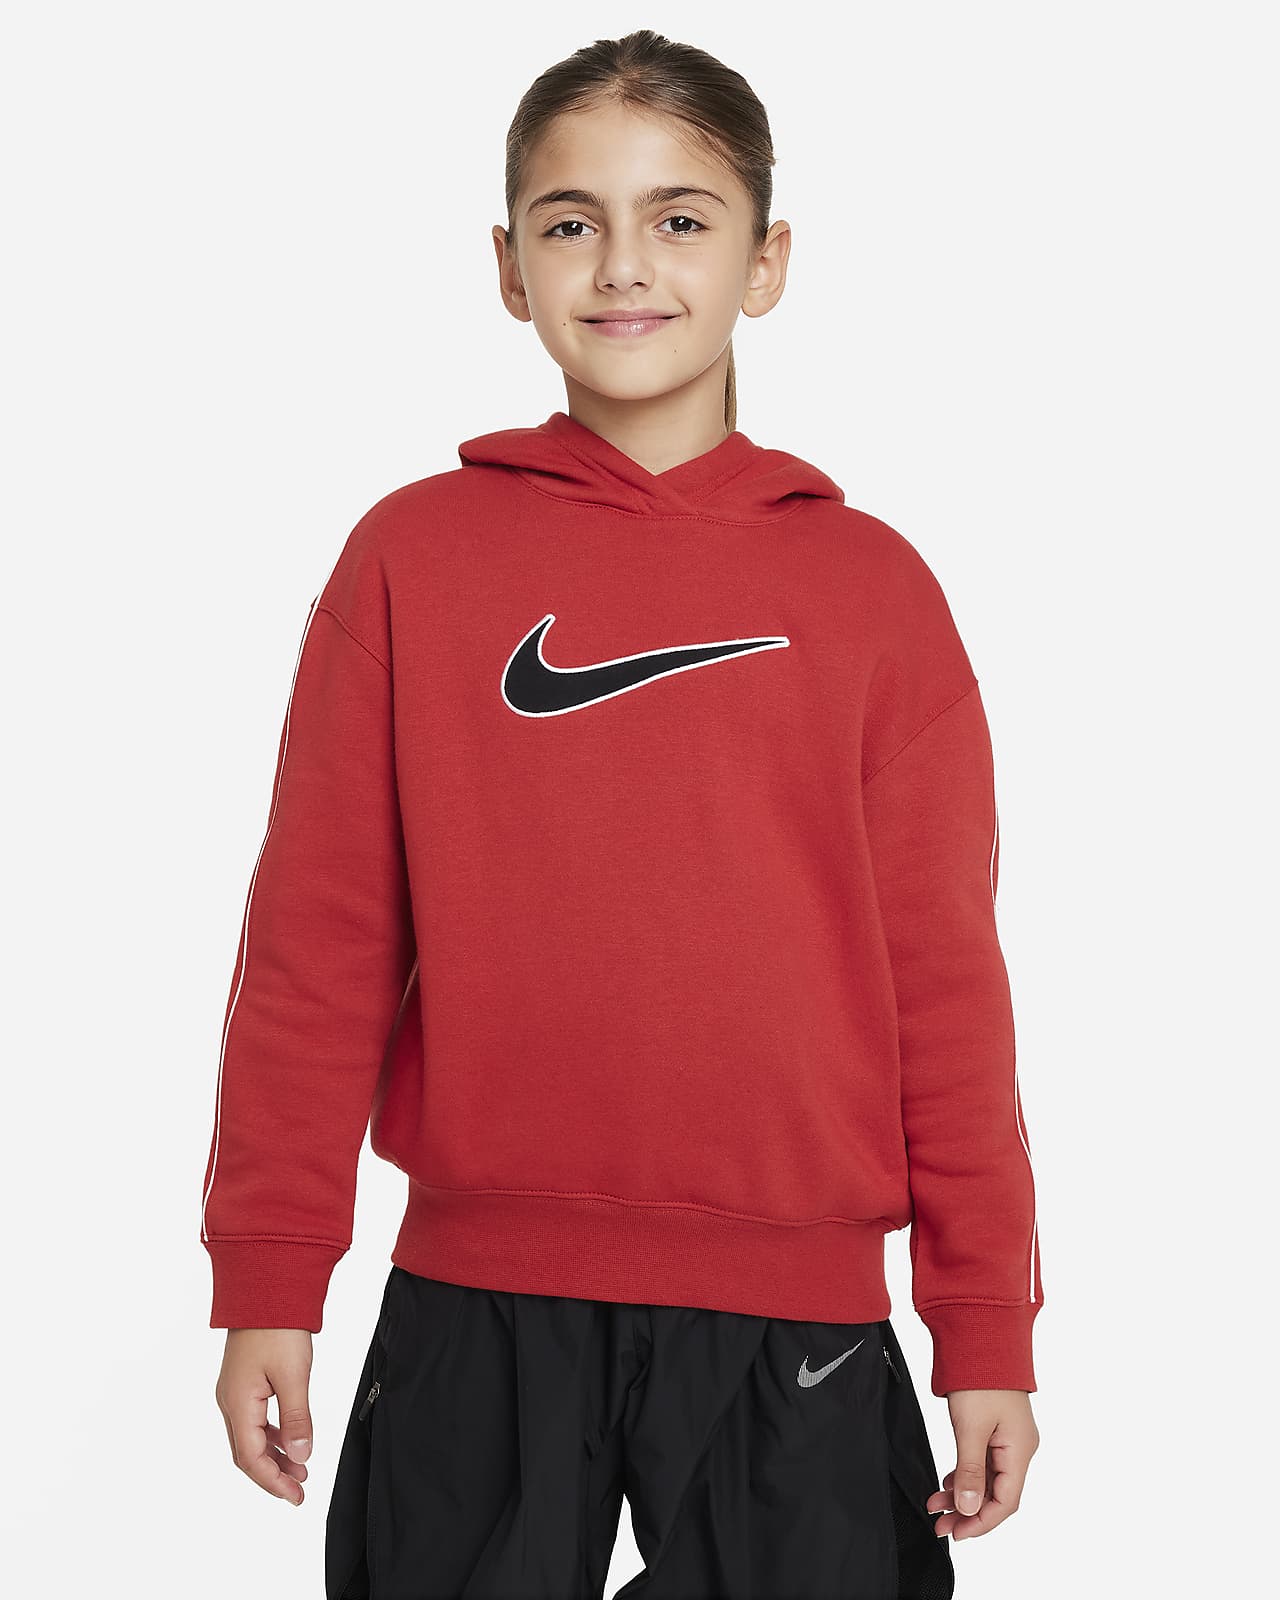 Nike Sportswear Fleece-Hoodie in Oversize für CH Kinder (Mädchen). ältere Nike